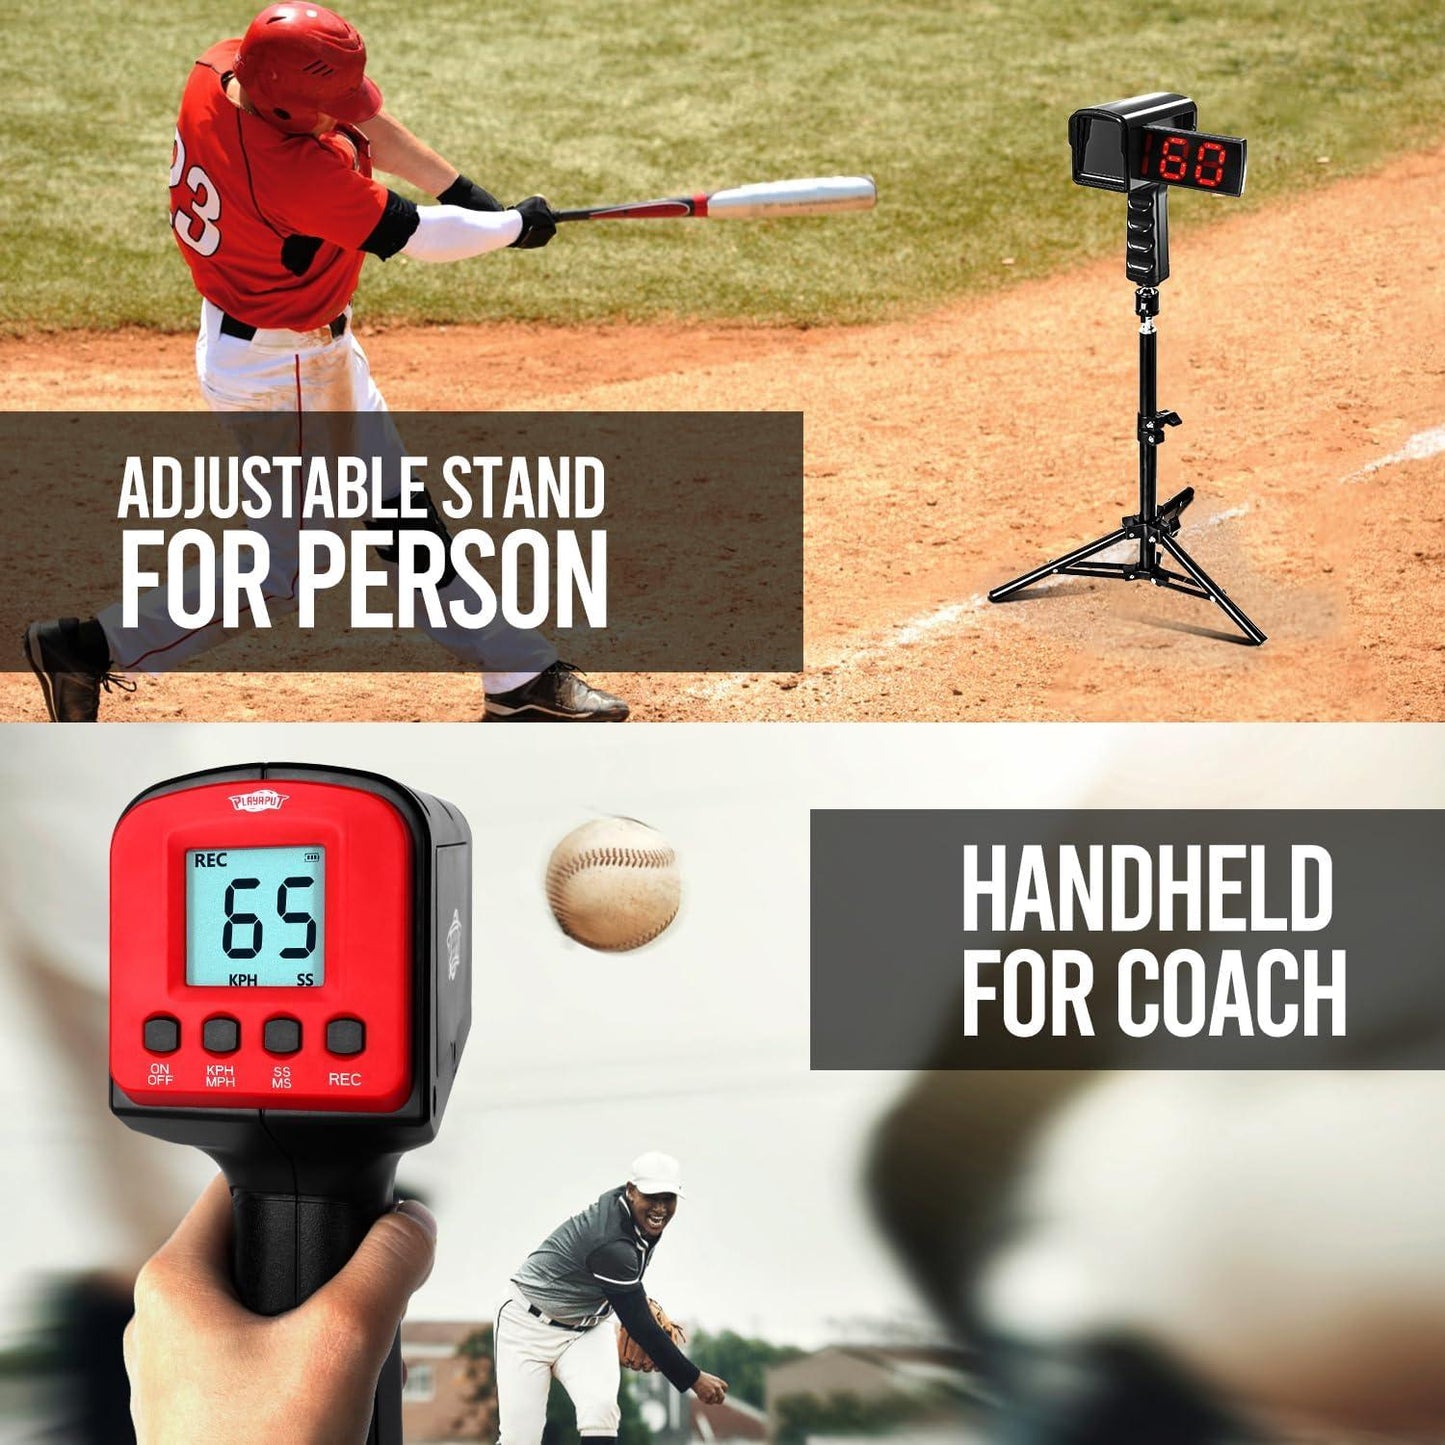 PLAYAPUT Baseball Pitching Net & Radar Speed Gun Combo Set for Baseball and Softball - PlayaPut